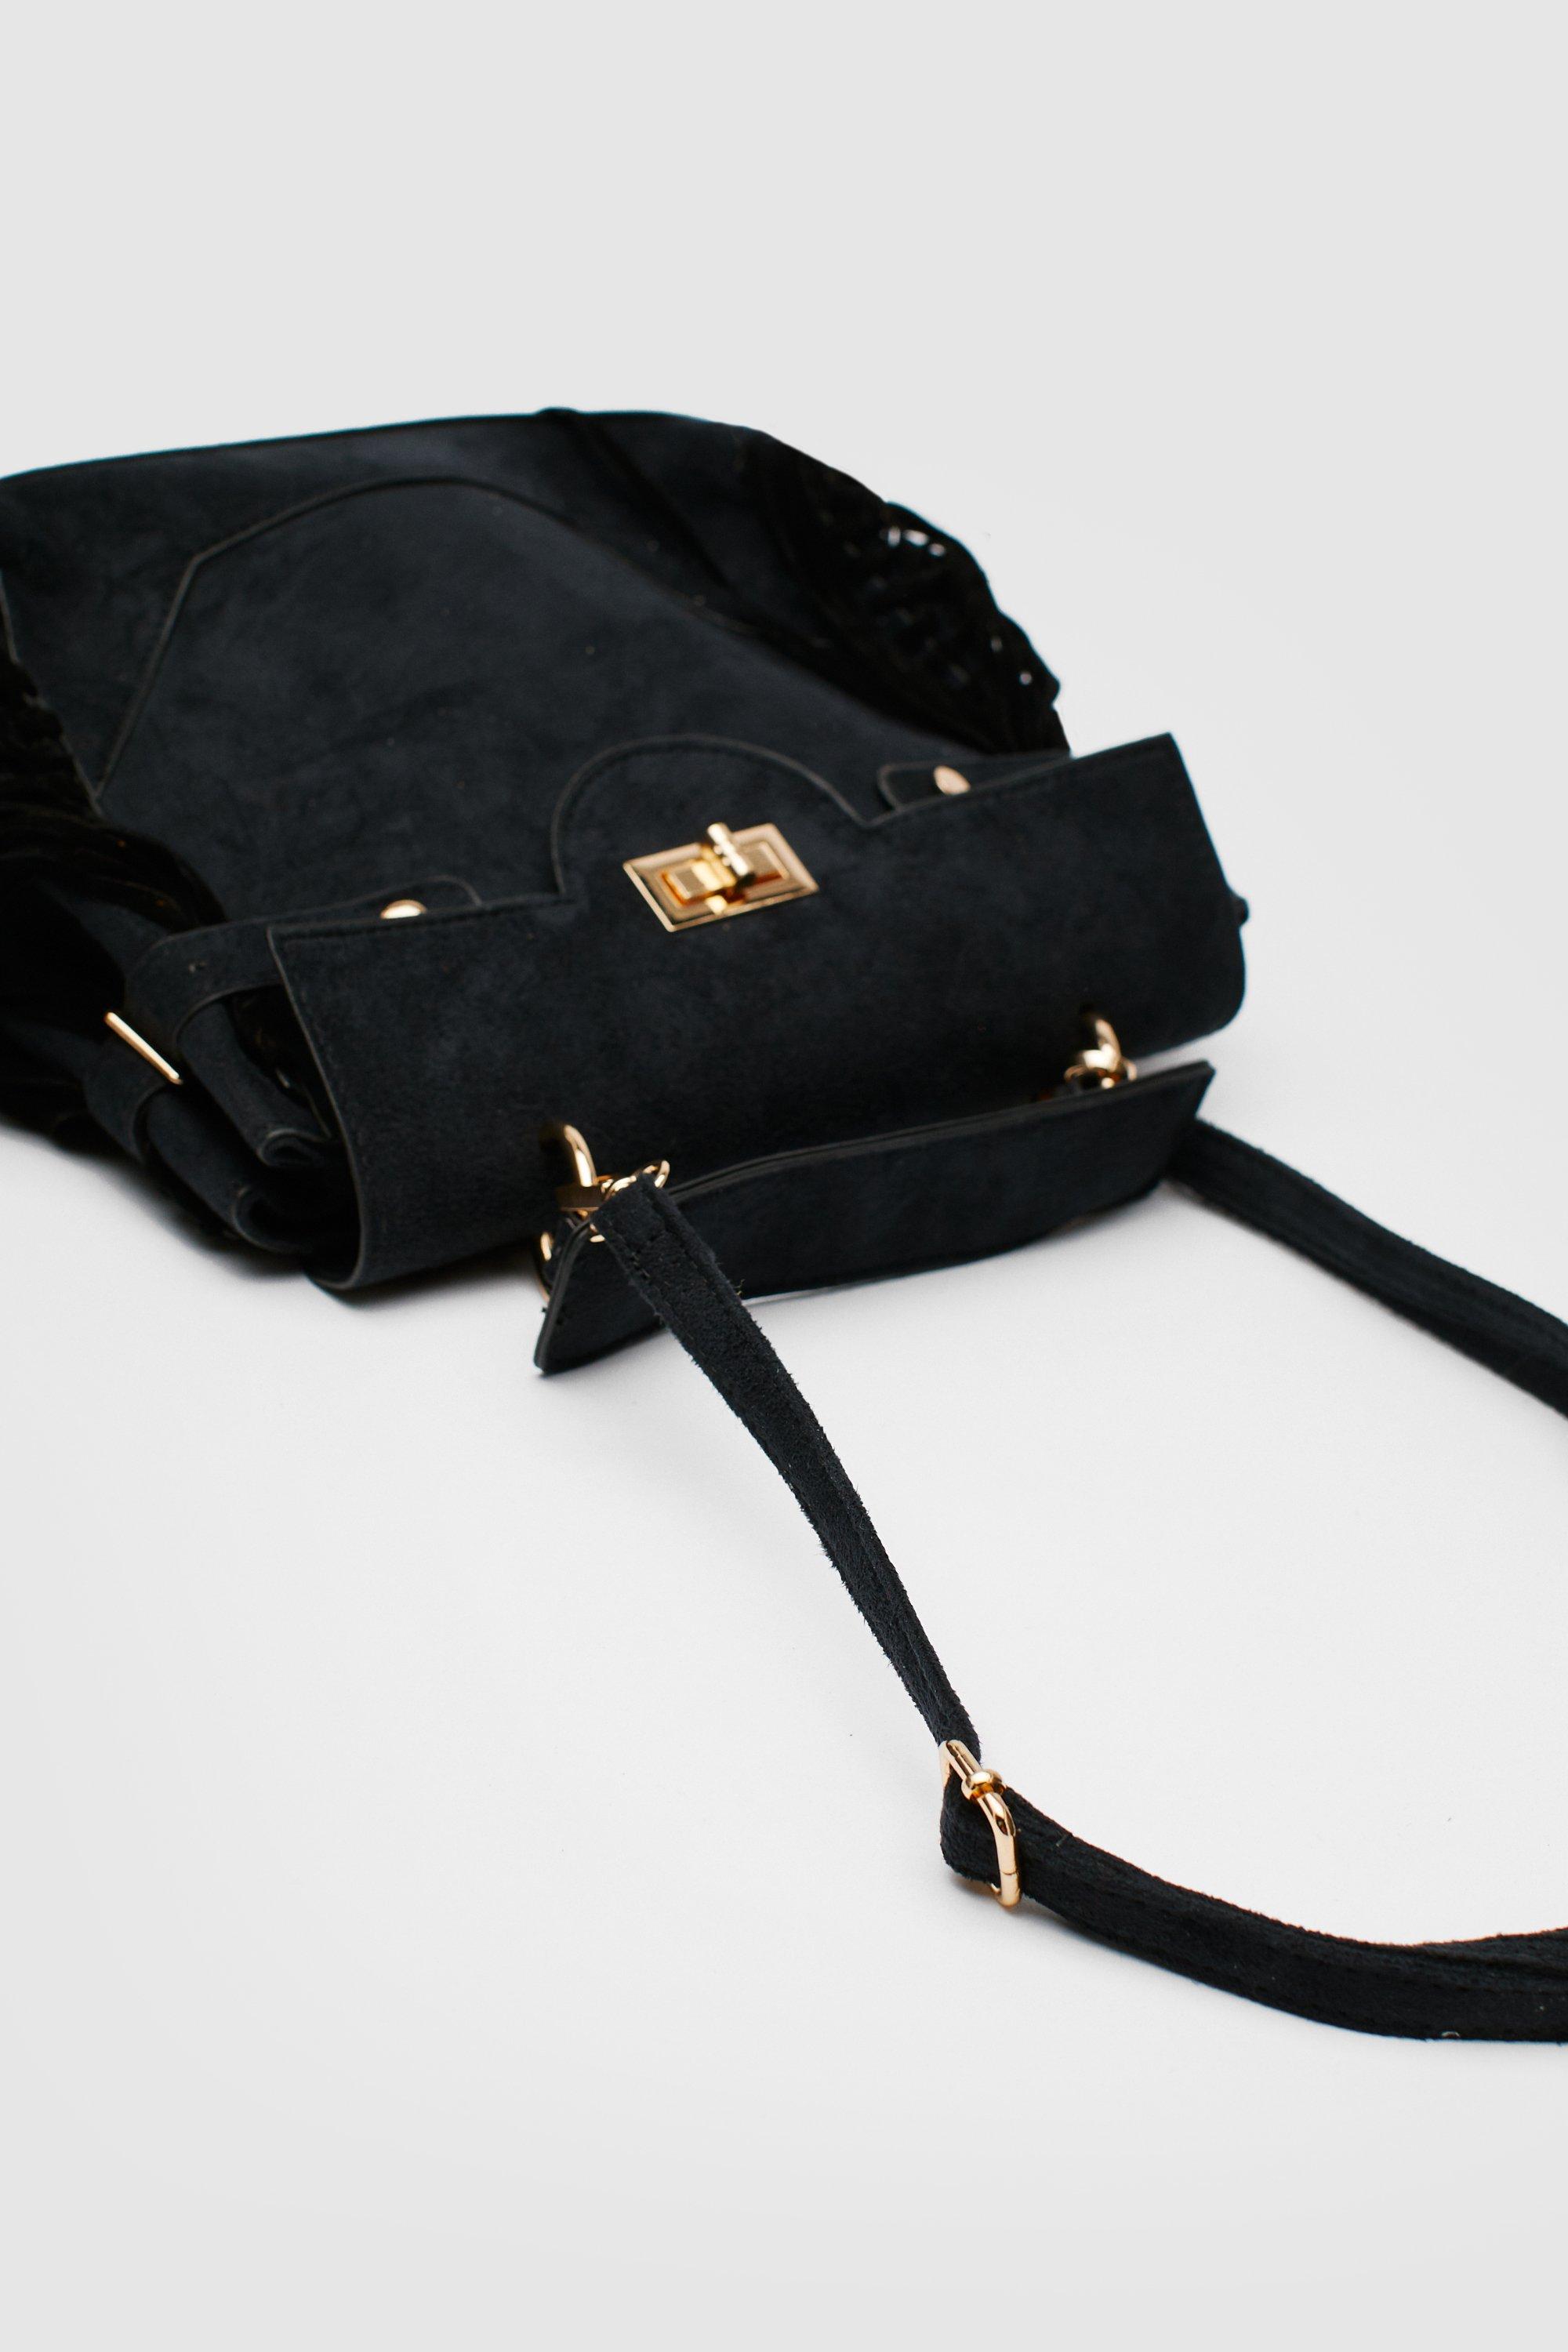 Sanna Suede Leather Mini Fringe Bag in Black